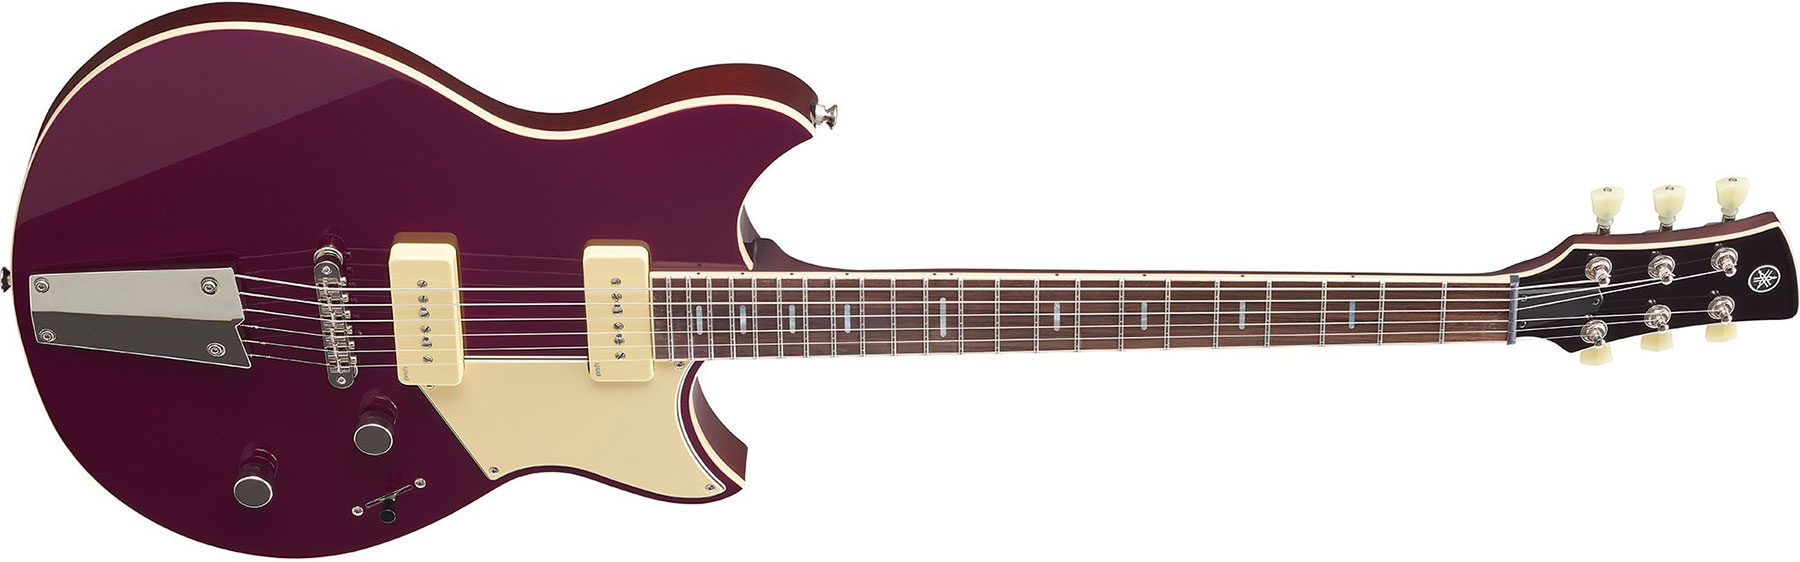 Yamaha Rss02t Revstar Standard 2p90 Ht Rw - Hot Merlot - Guitarra eléctrica de doble corte - Variation 1